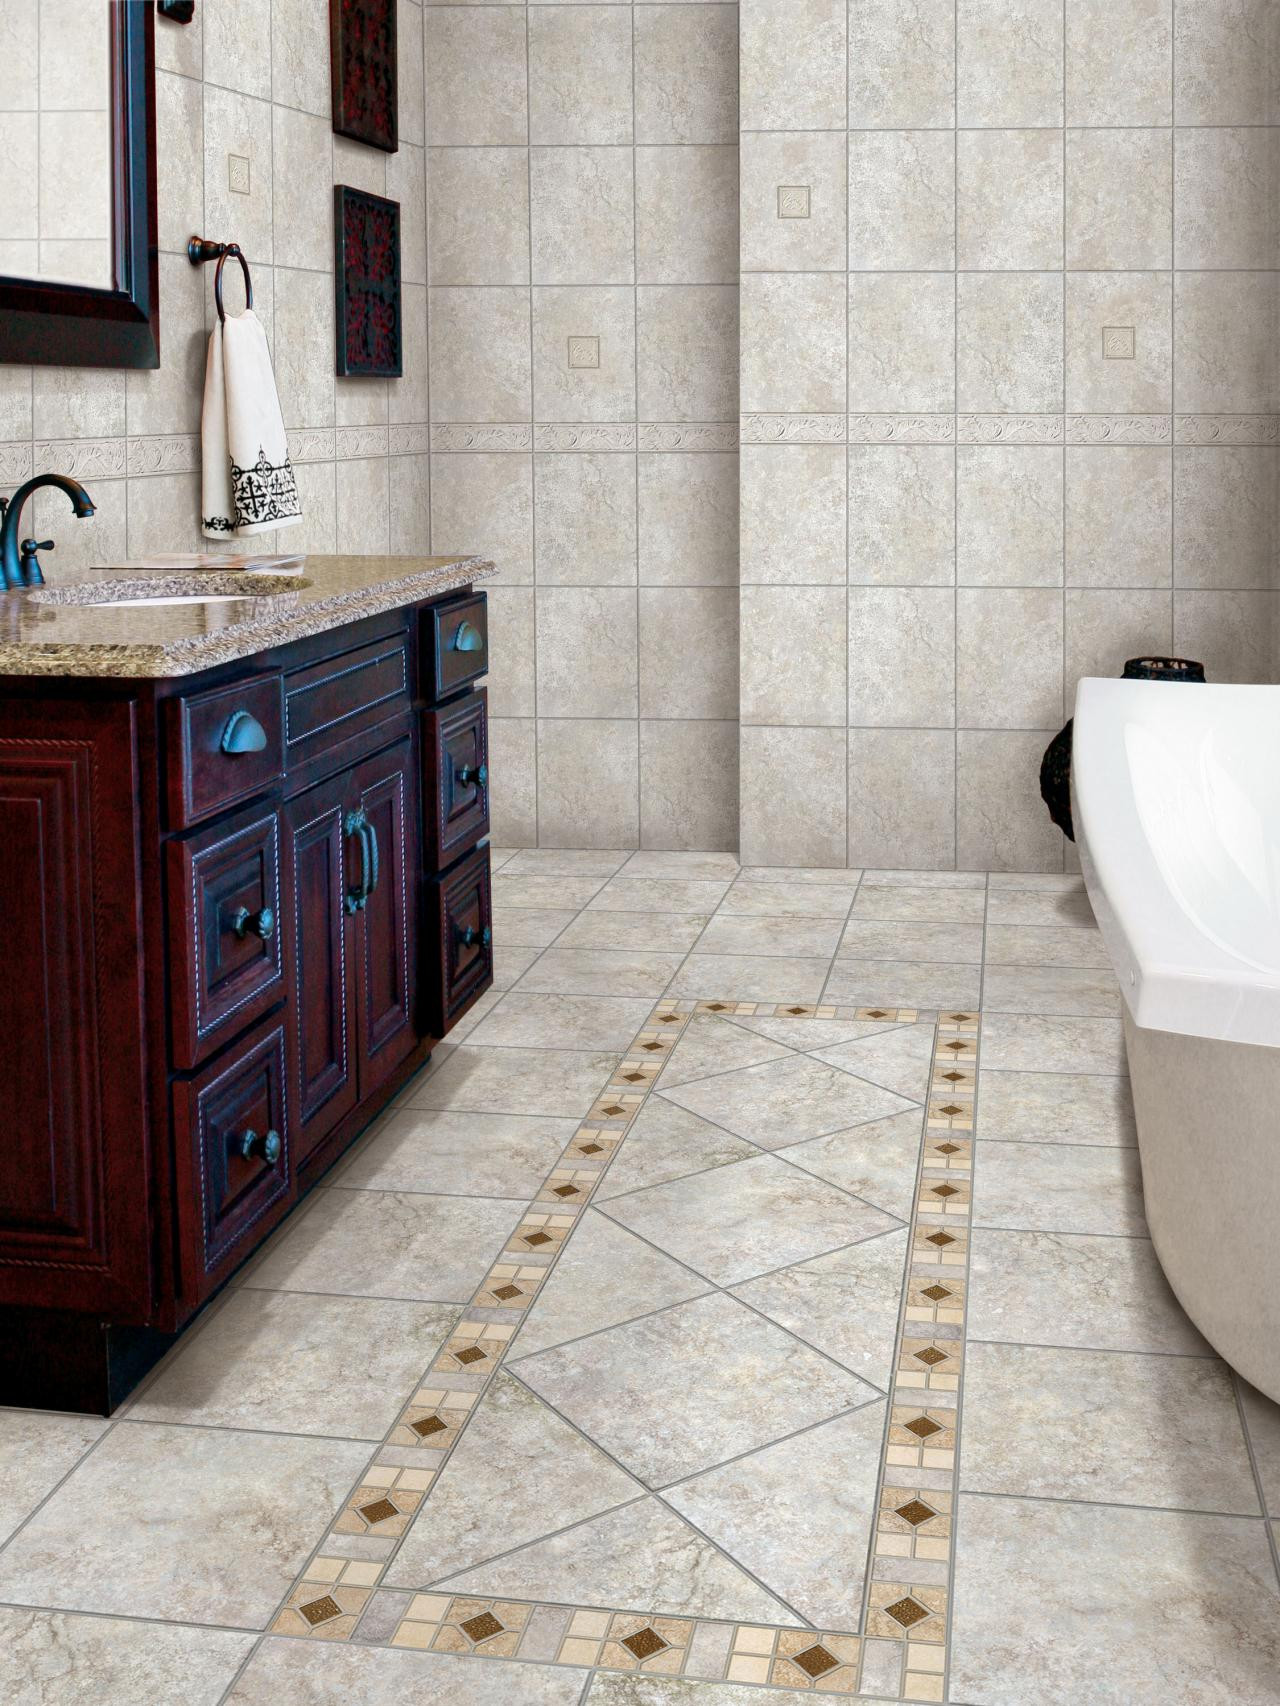 Floor Tiles For Bathroom
 How to tiling a bathroom floor right tips Interior